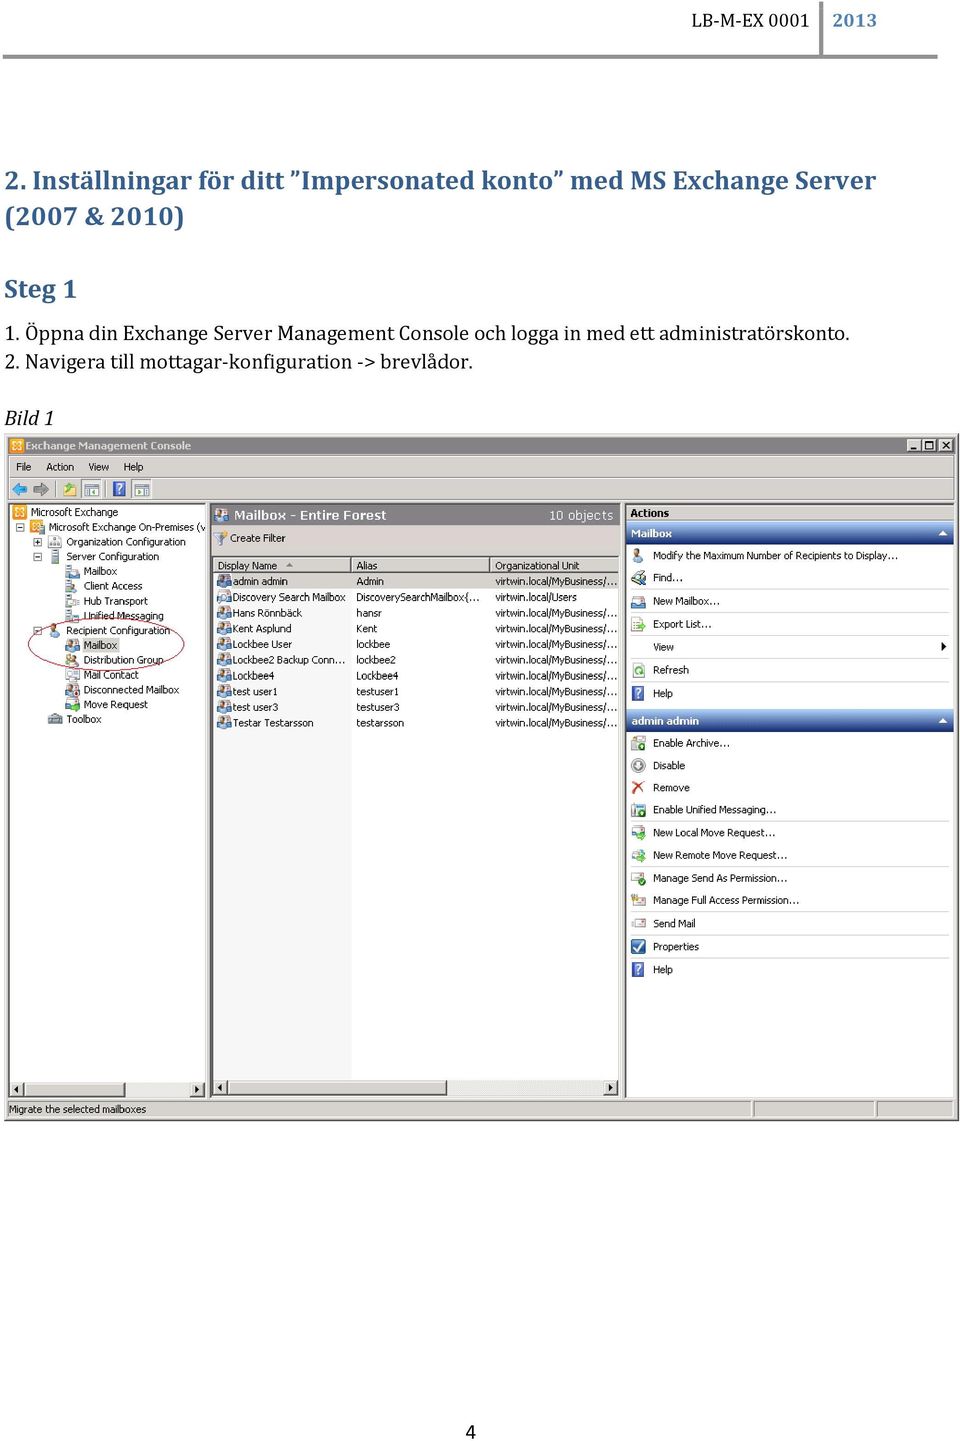 Öppna din Exchange Server Management Console och logga in